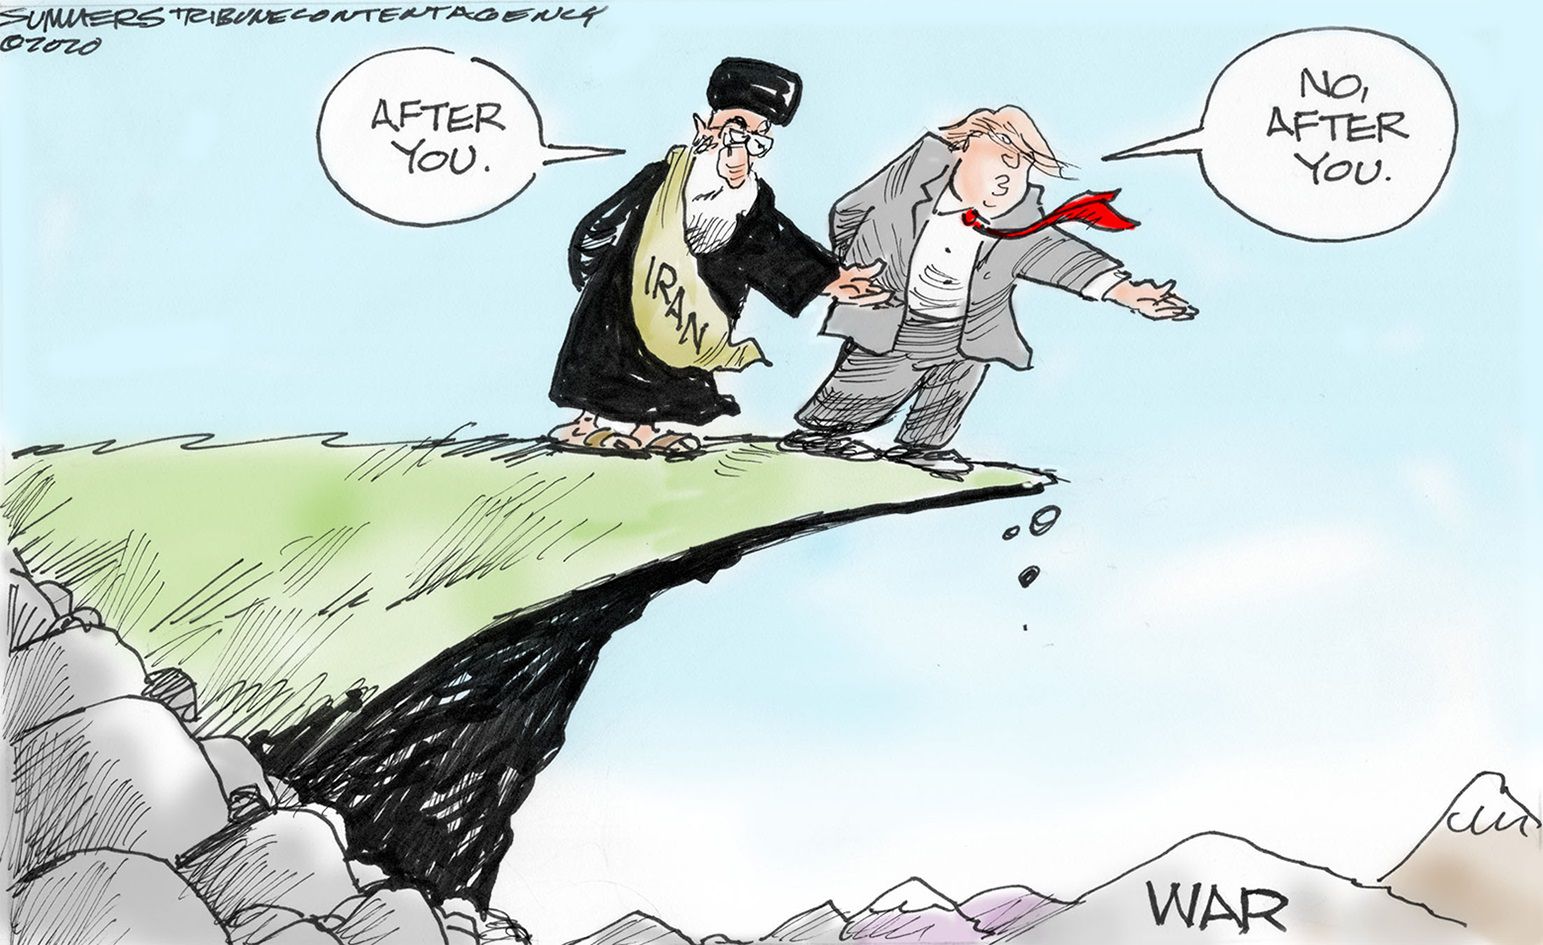 Editorial cartoons for Jan. 12, 2020: Iran, US back away from brink of war  